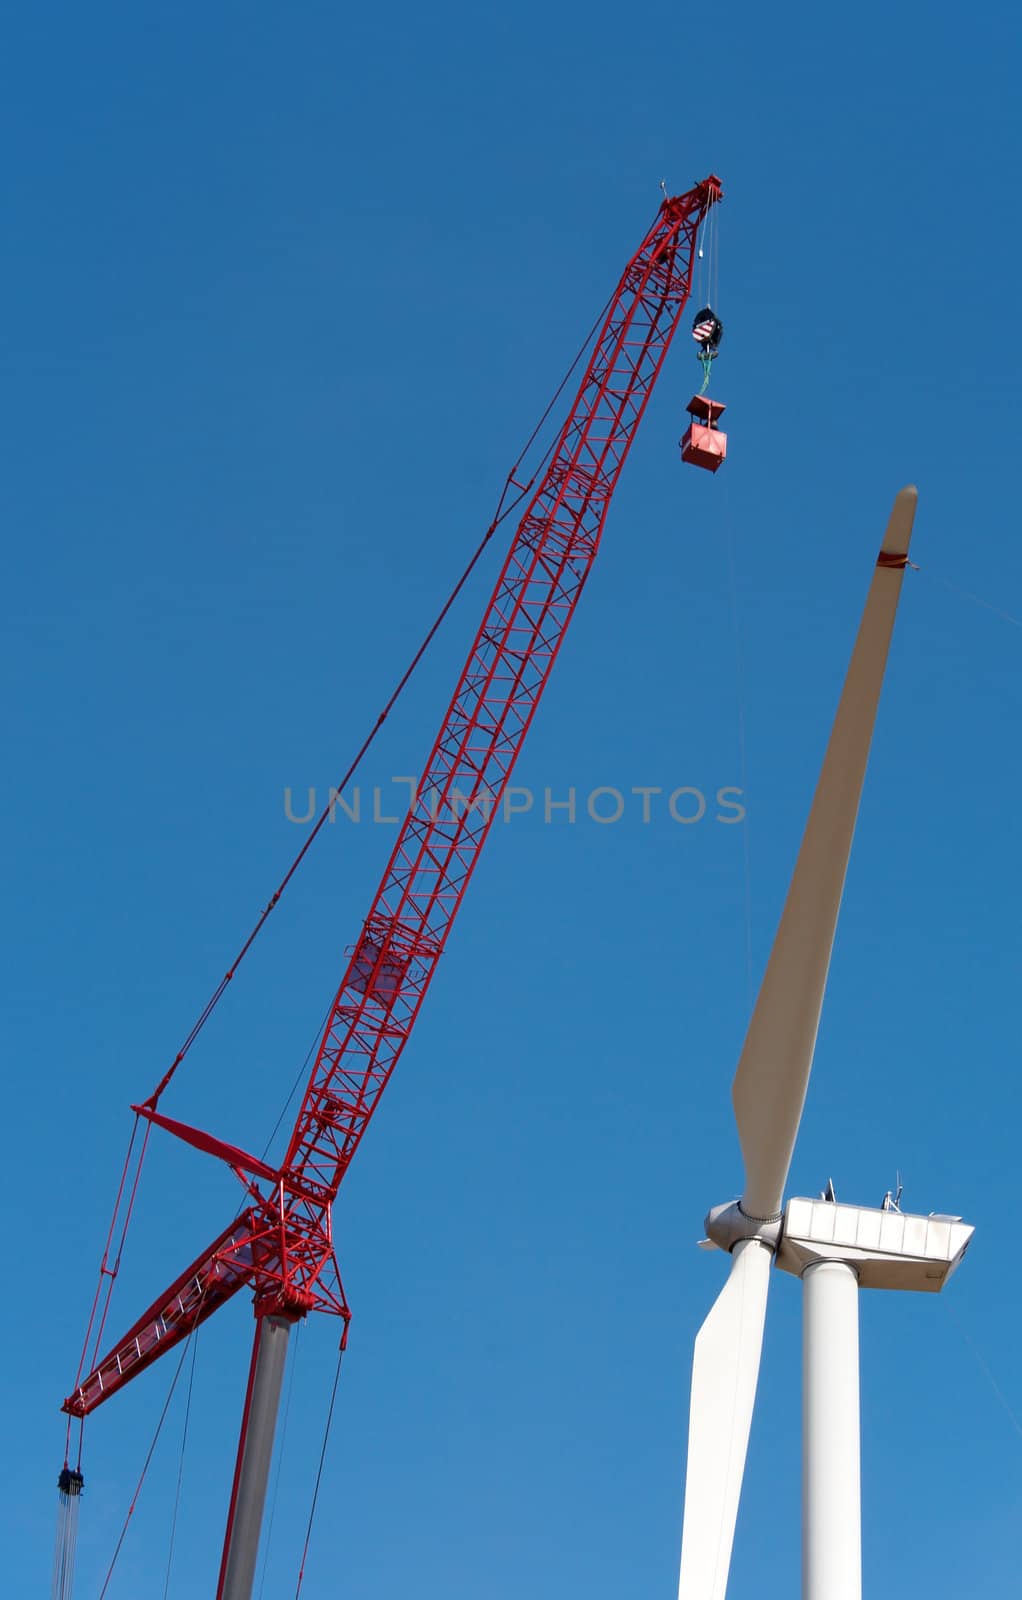 Wind Turbines Under Construction by Nickondr